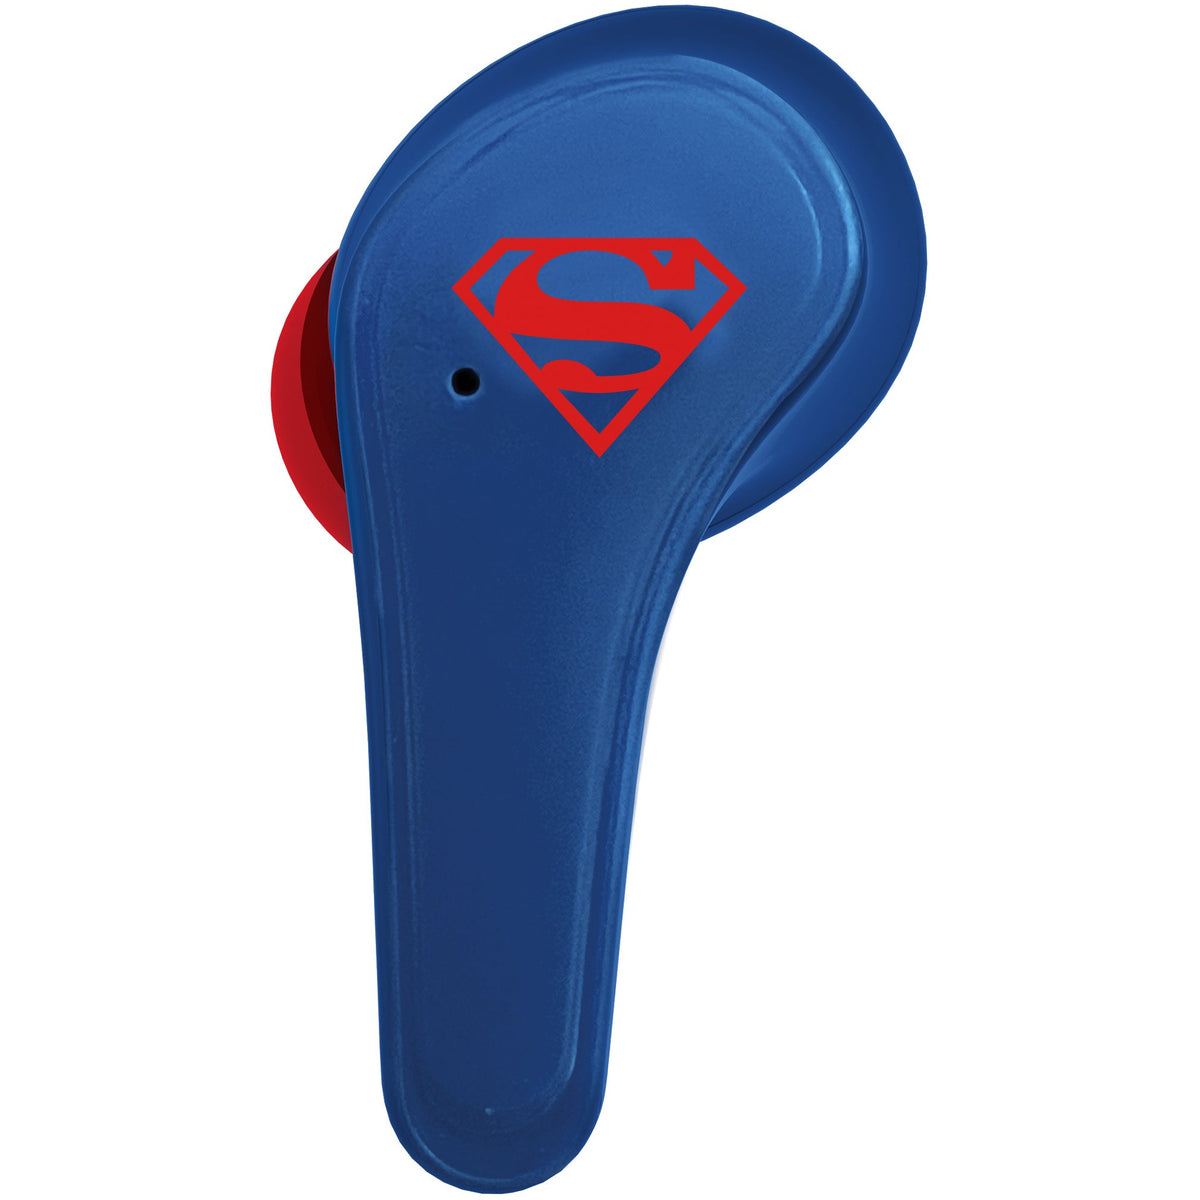 OTL DC Comics Superman TWS In-Ear Wireless Earbuds - Blue | DC0880 from OTL - DID Electrical